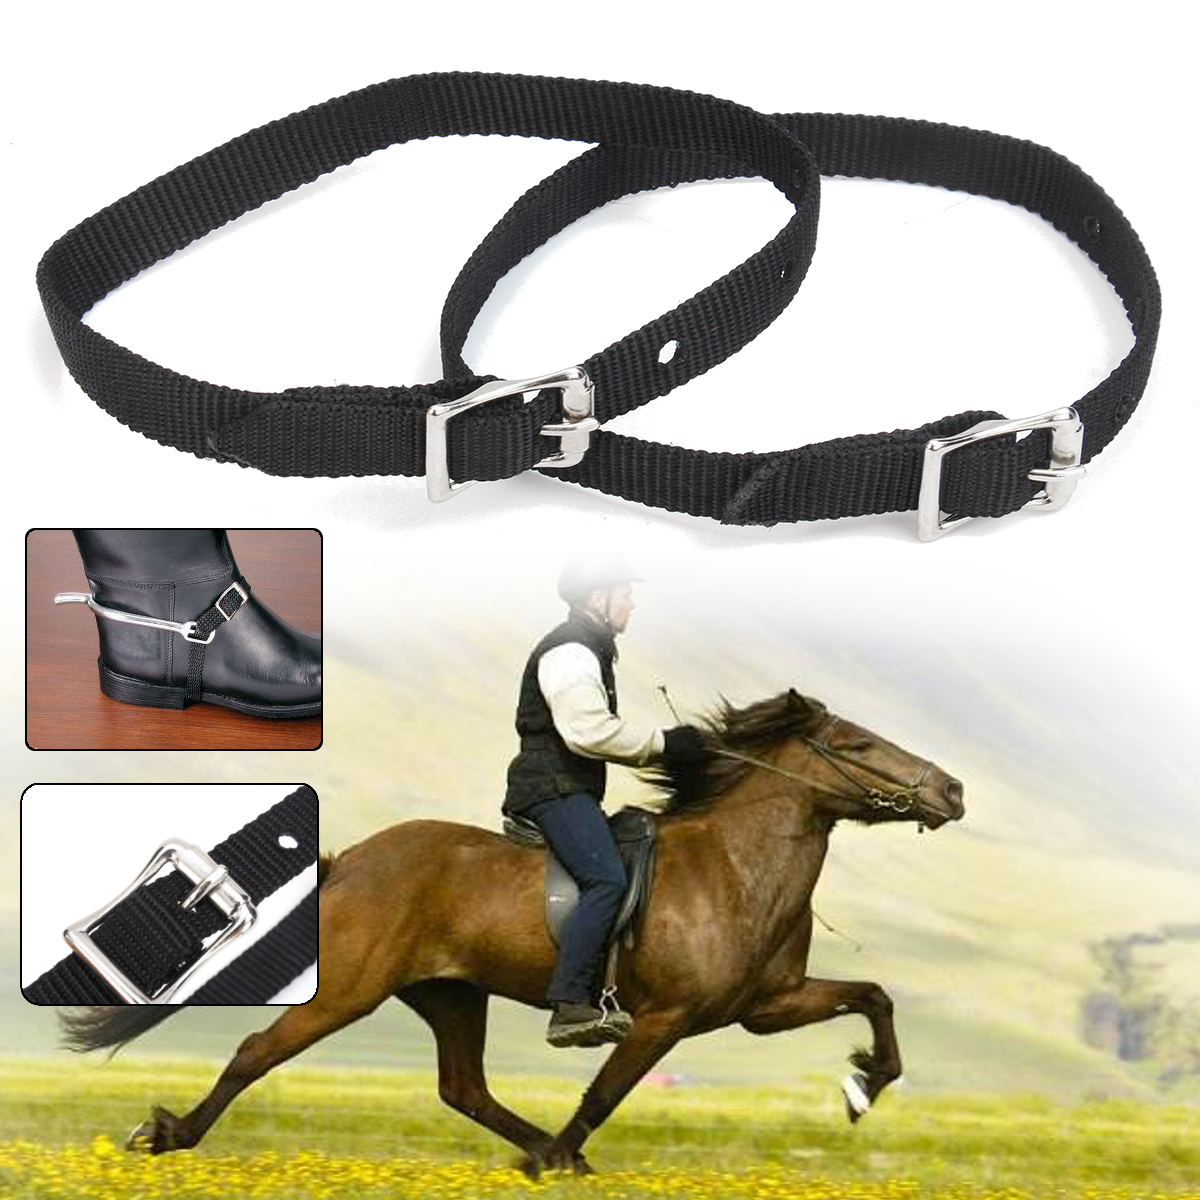 Western-Harness-Leather-Spur-Straps-Mens-Ladies-Cowboy-Horse-Buckles-Black-1241359